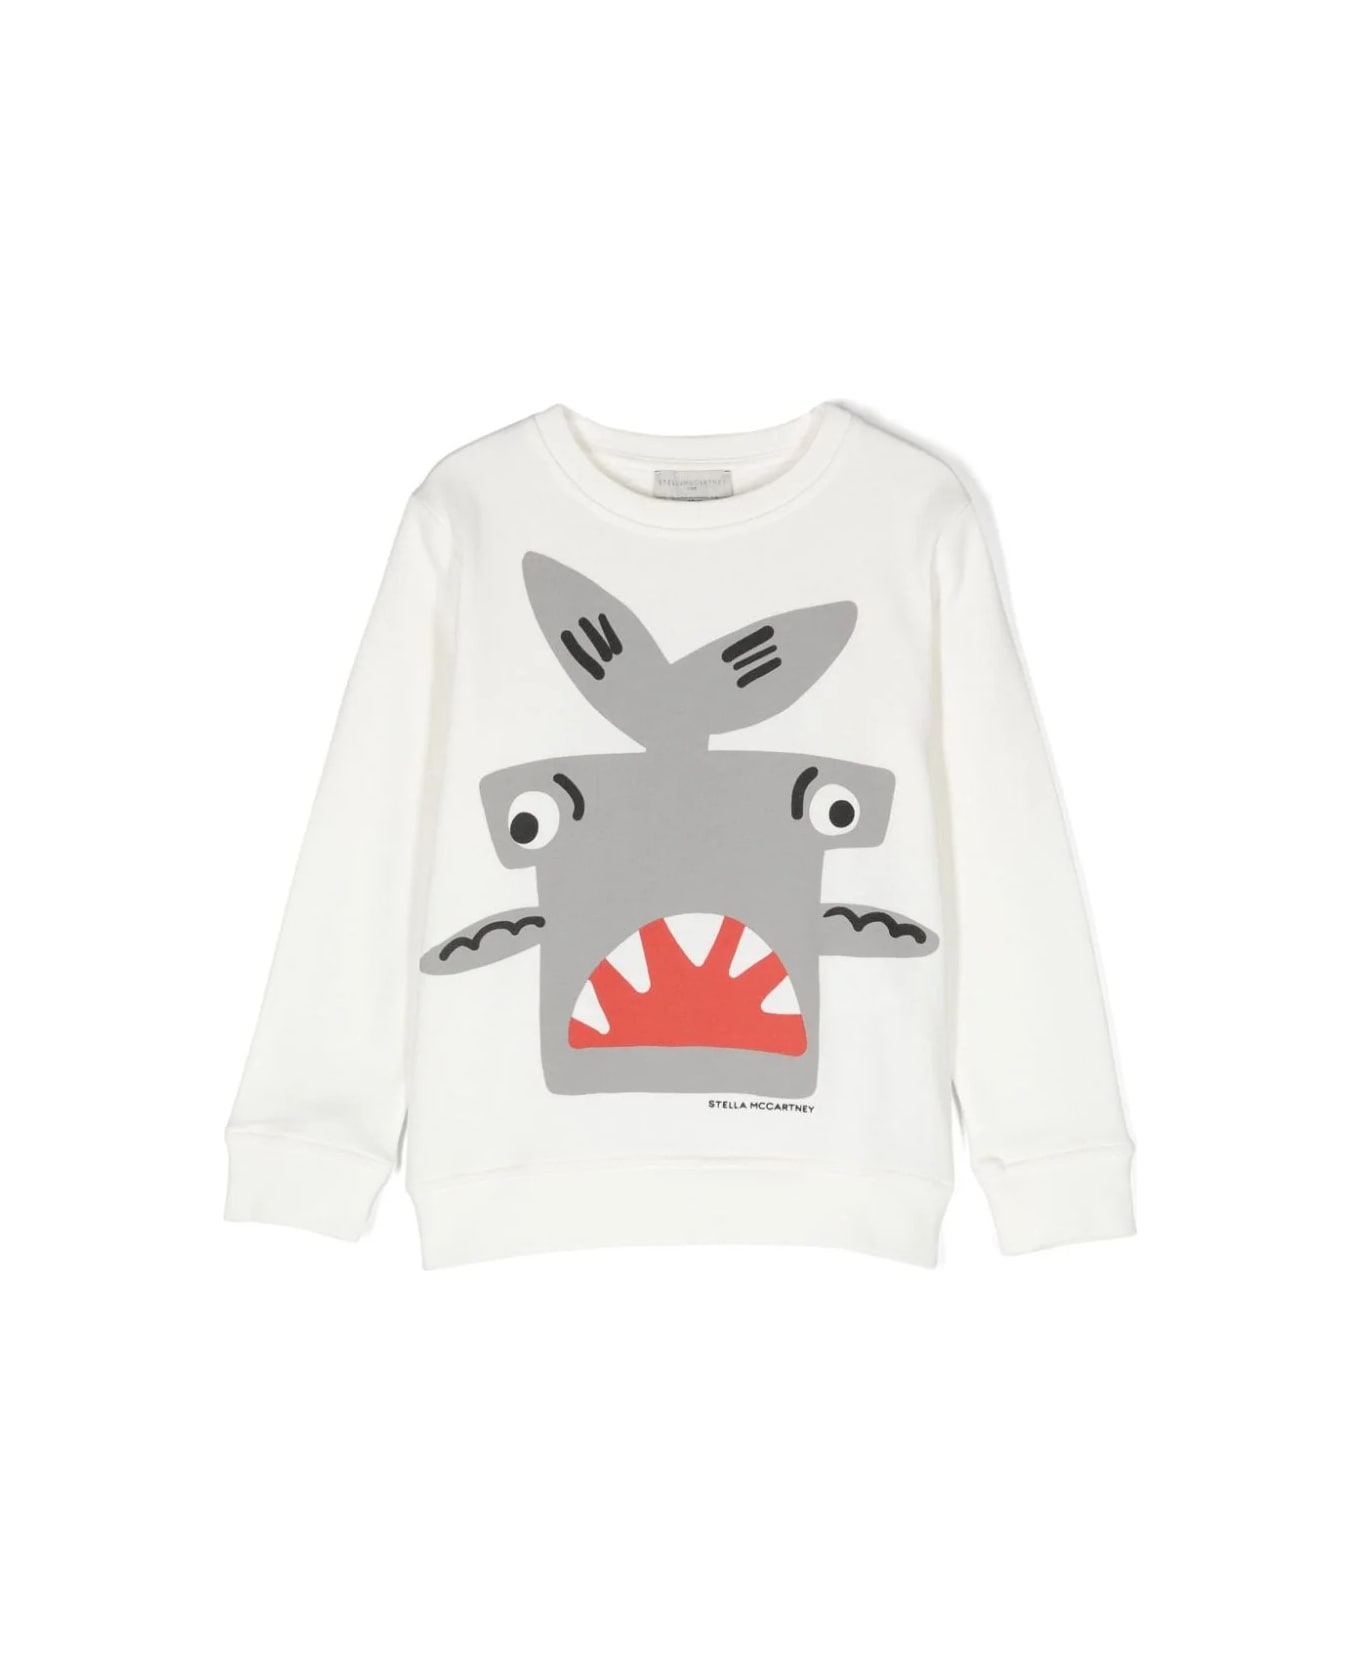 Stella McCartney Kids Ivory Sweatshirt With Shark Motif - White